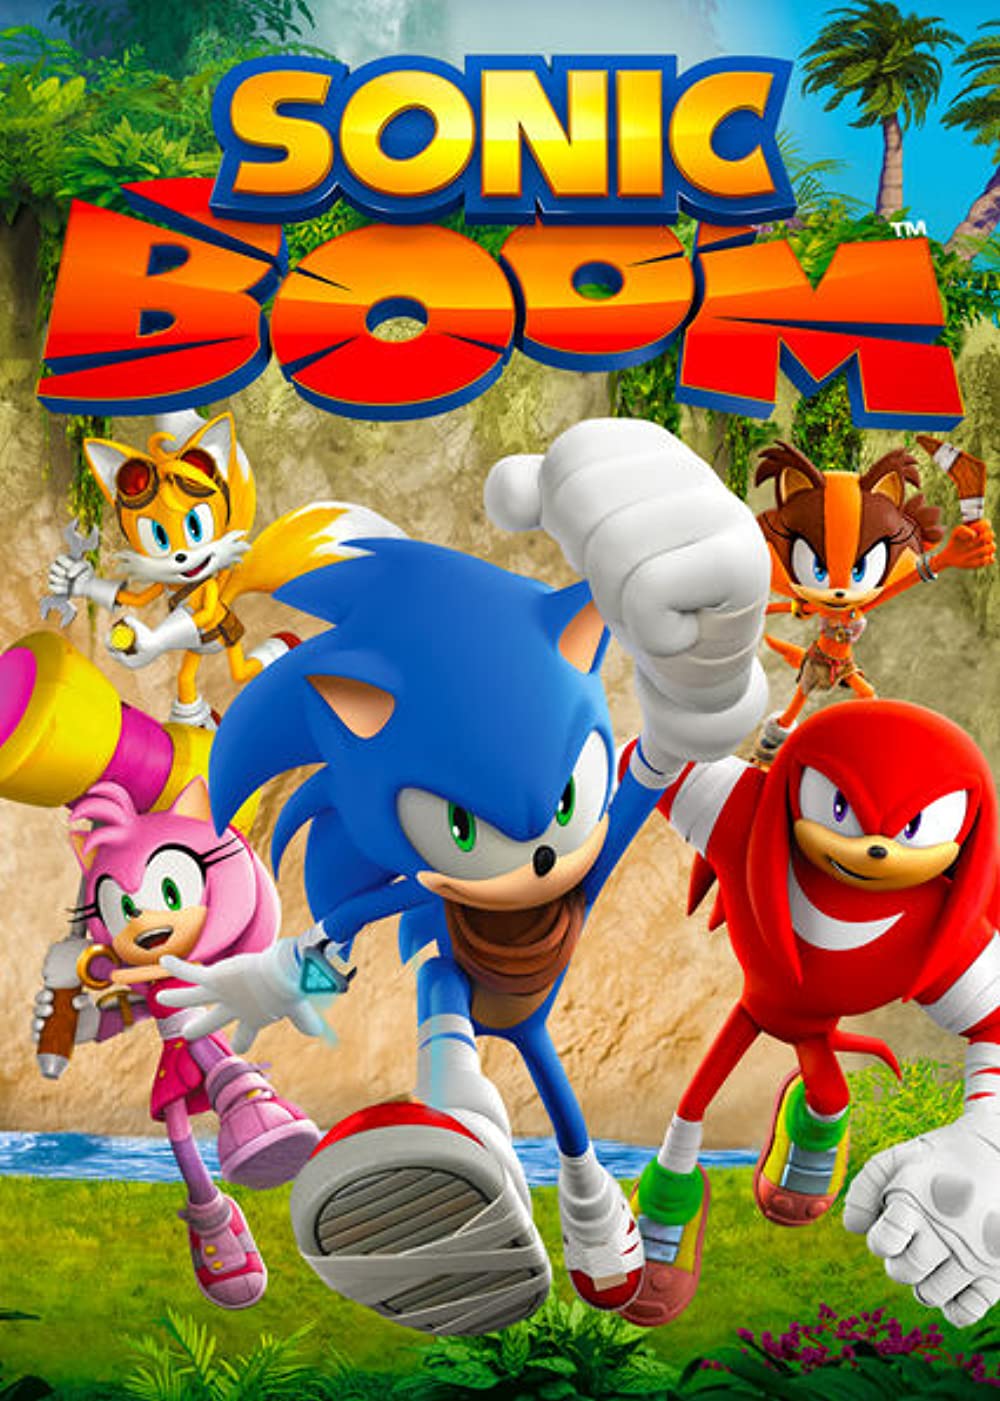 Sonic Boom: Rise of Lyric, Sonic Boom Wiki BR